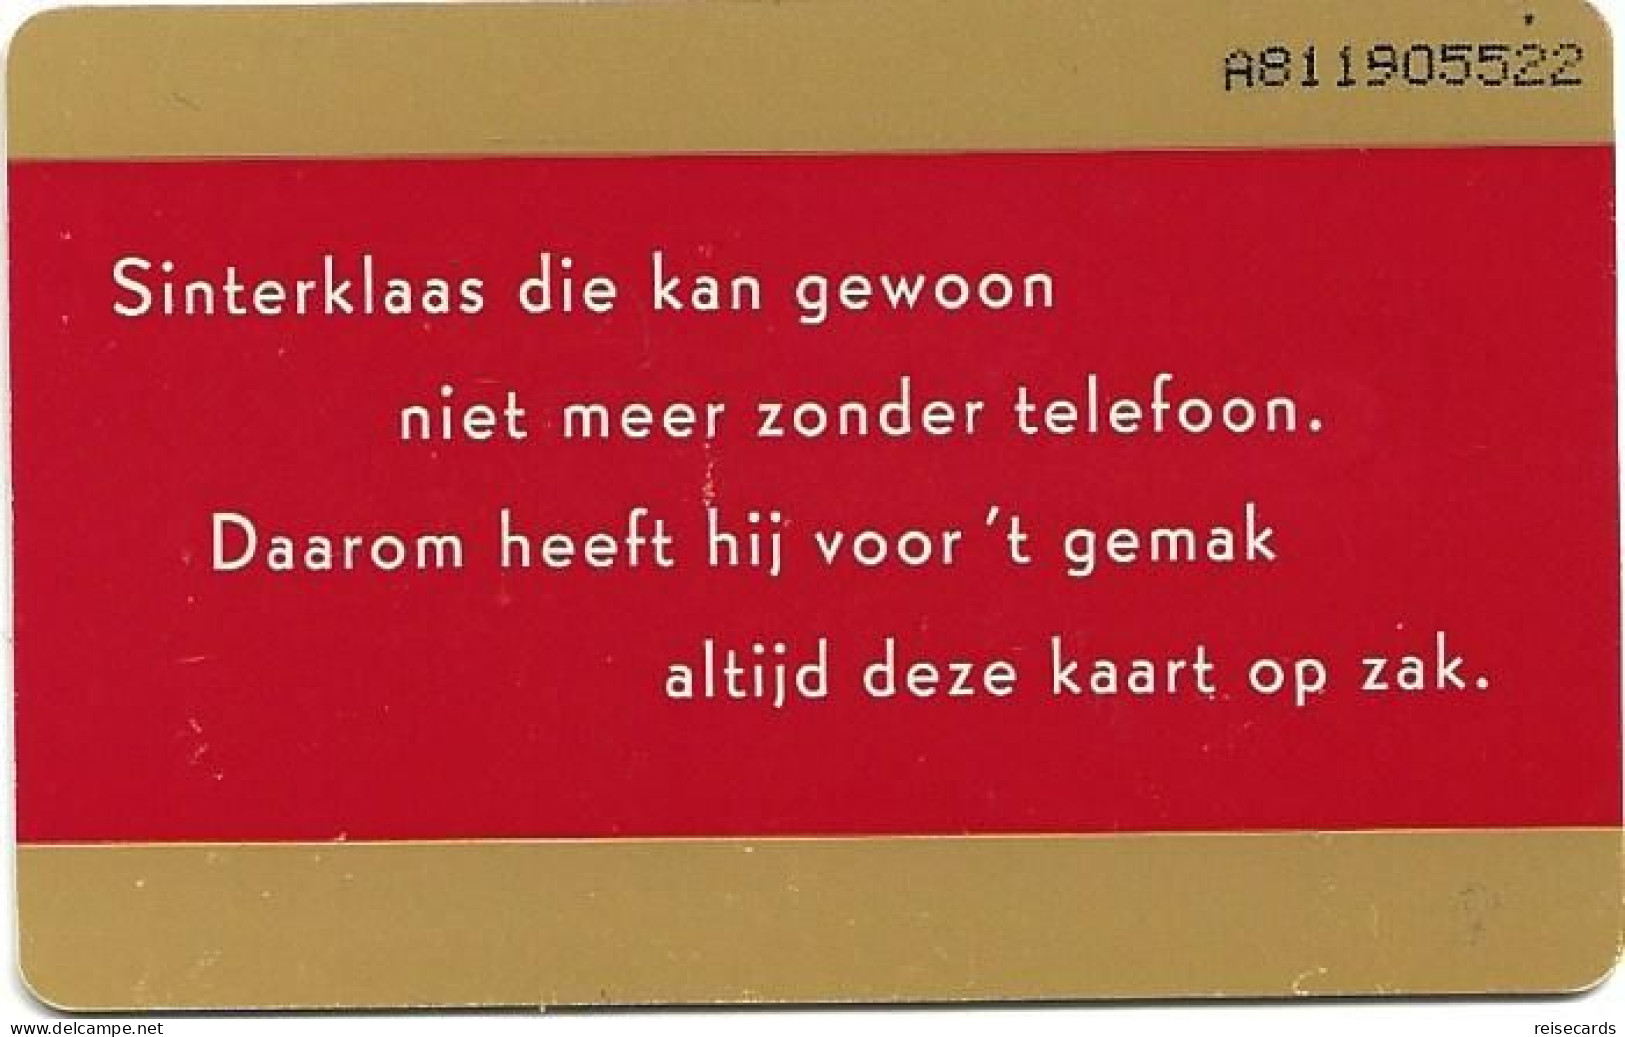 Netherlands: Ptt Telecom - 1996 Sinterklaas - Pubbliche